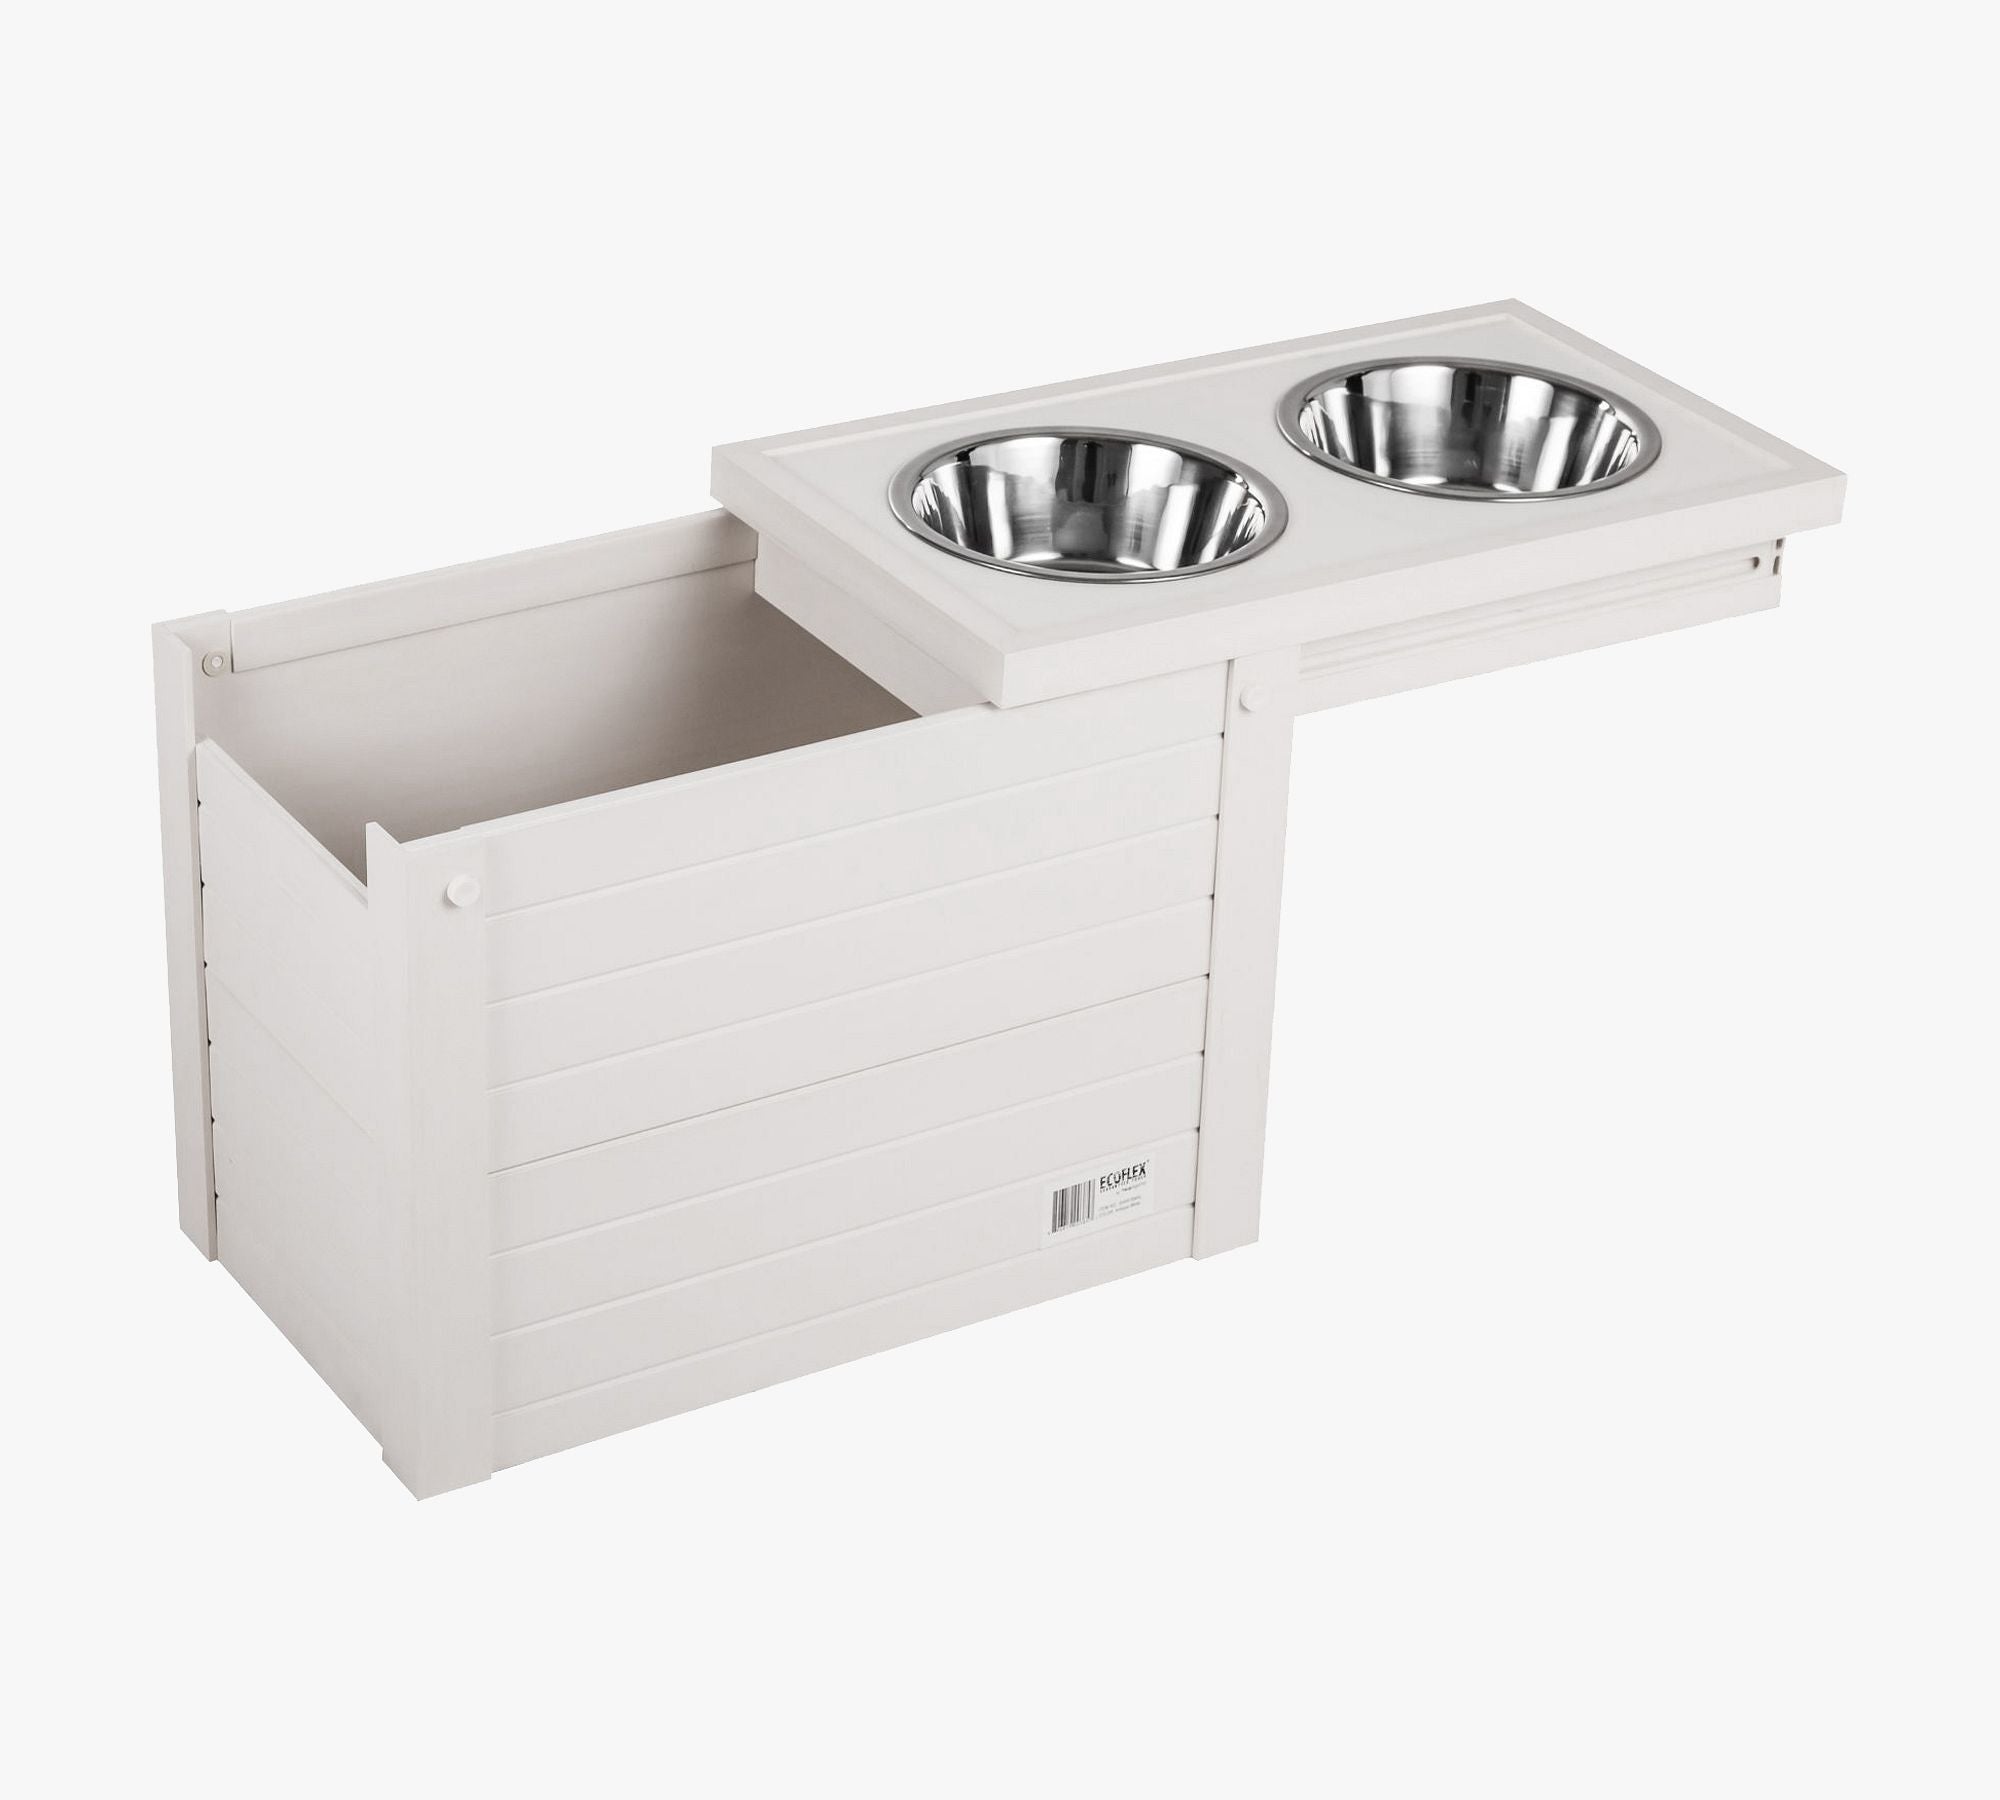 ecoflex-dual-pet-bowls-with-sliding-food-storage-2-xl_2.jpg